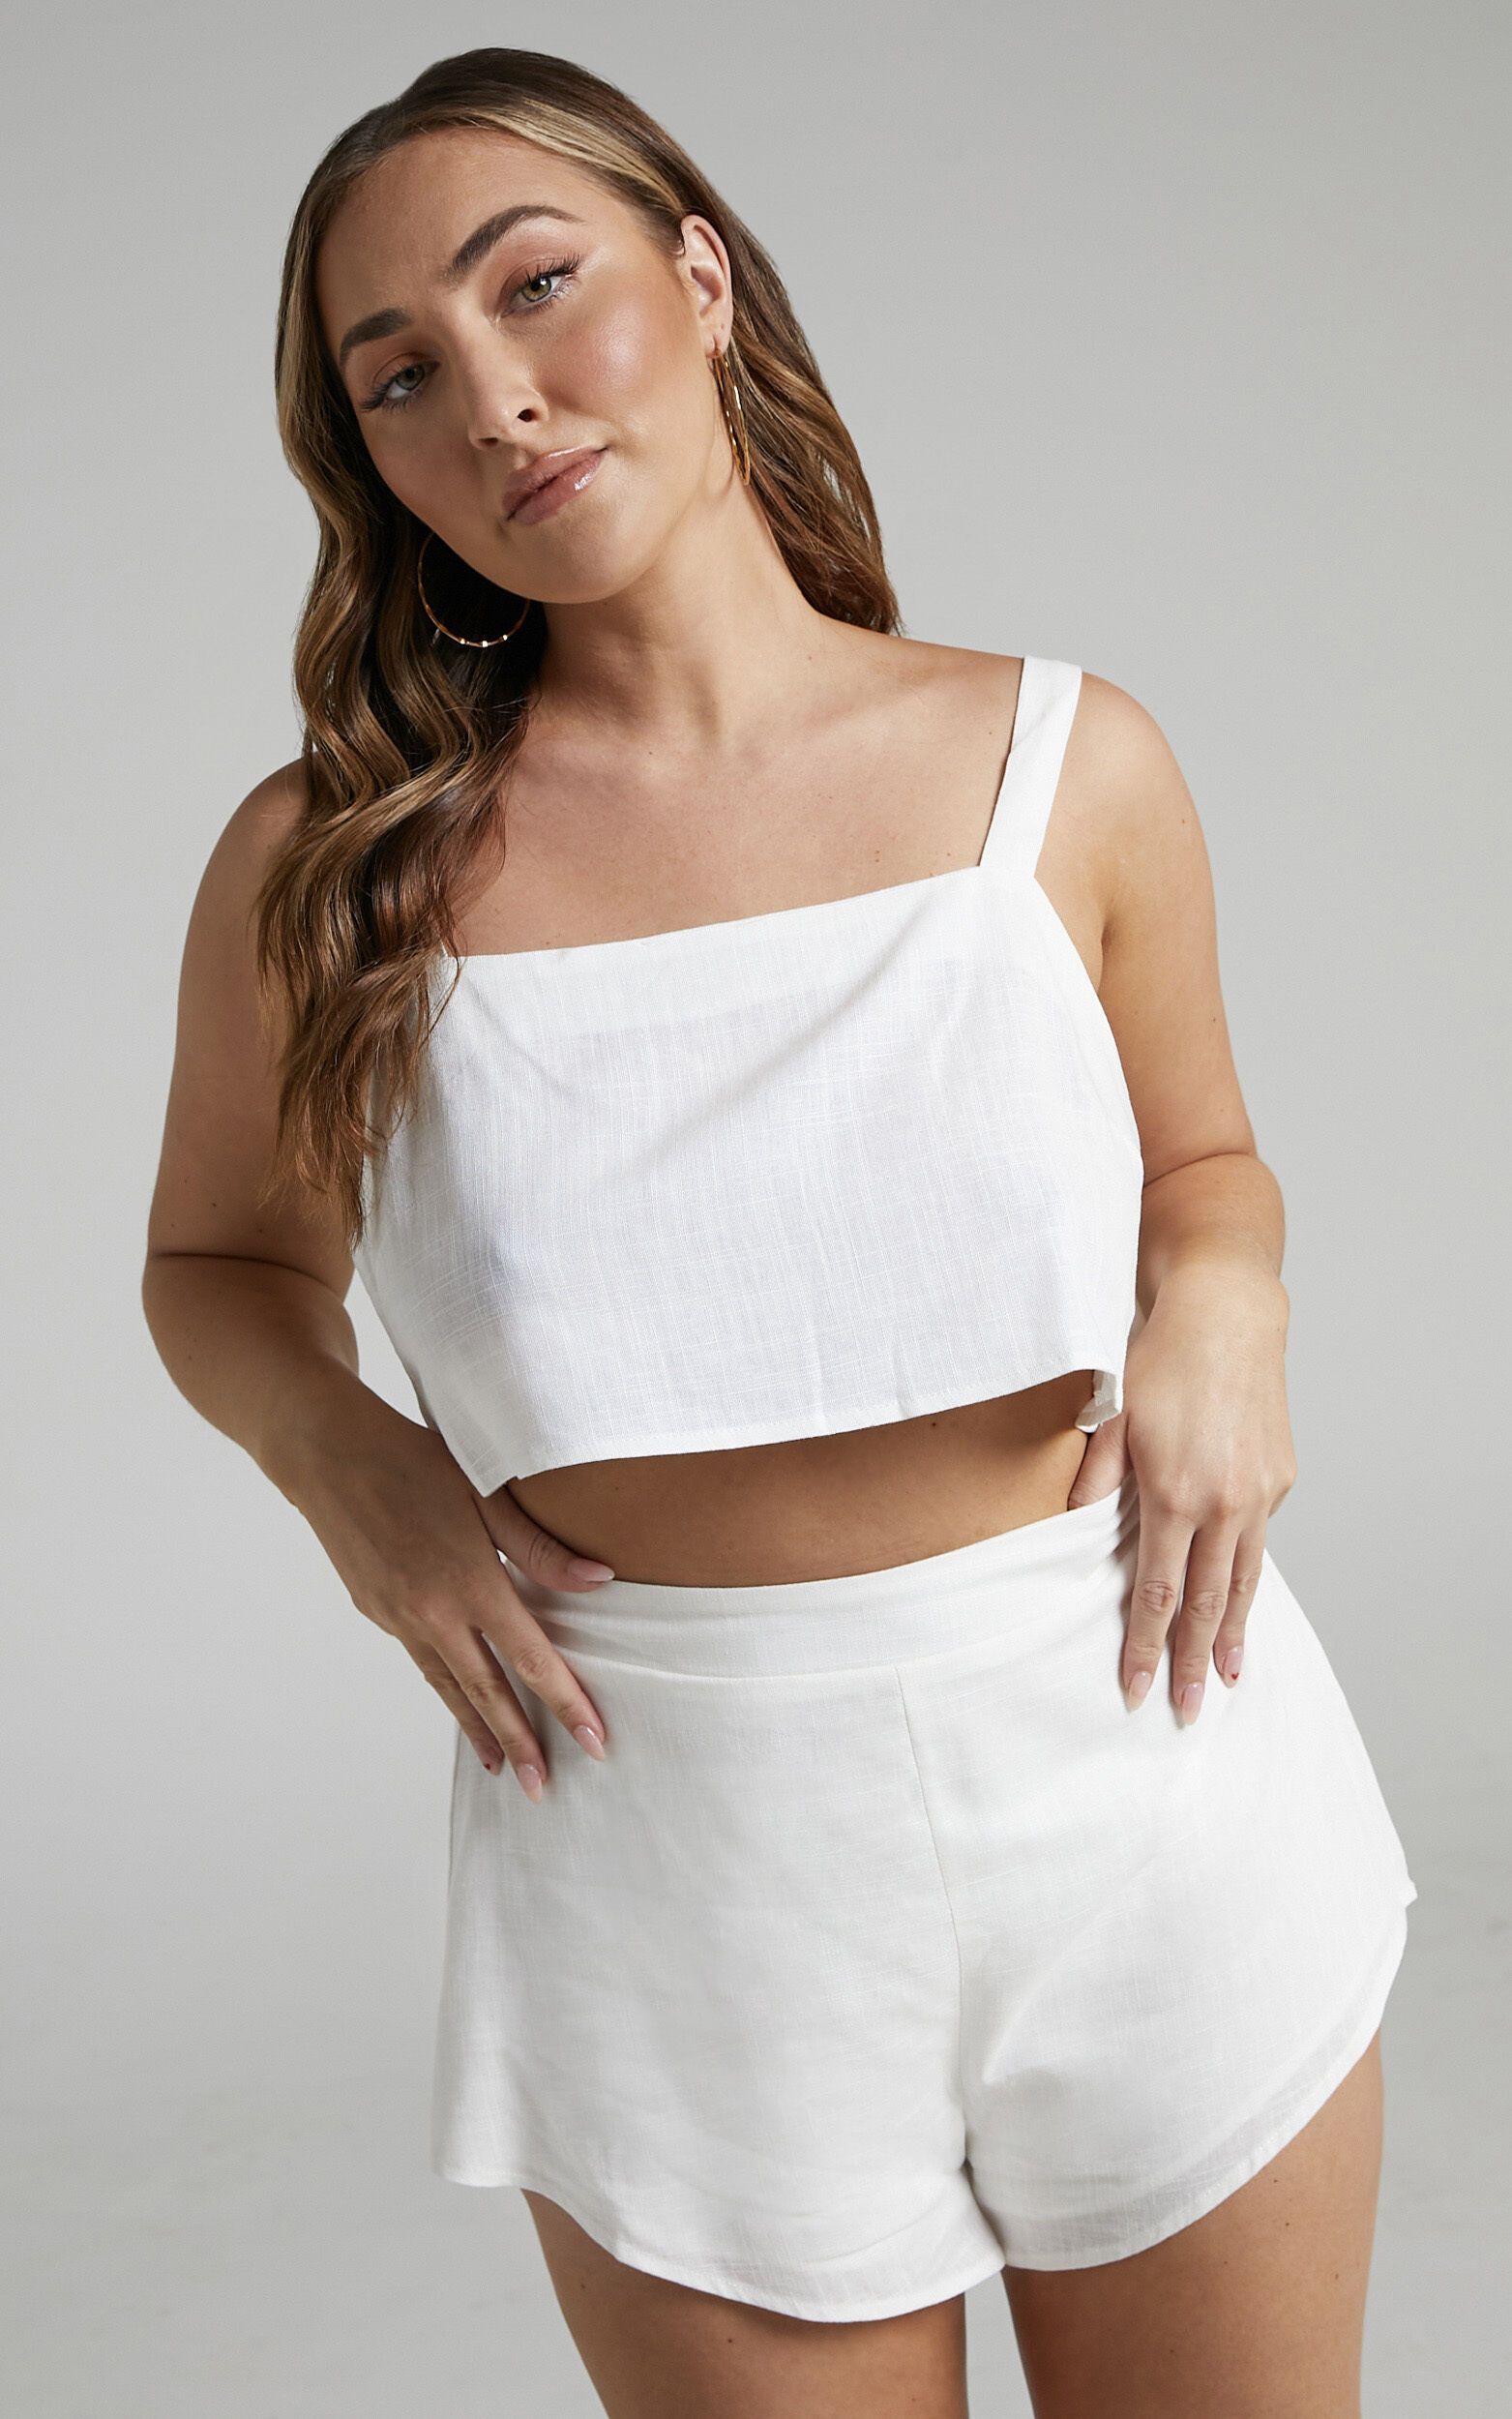 Zanrie Square Neck Crop Top and High Waist Mini Flare Shorts in White Linen Look | Showpo (ANZ)